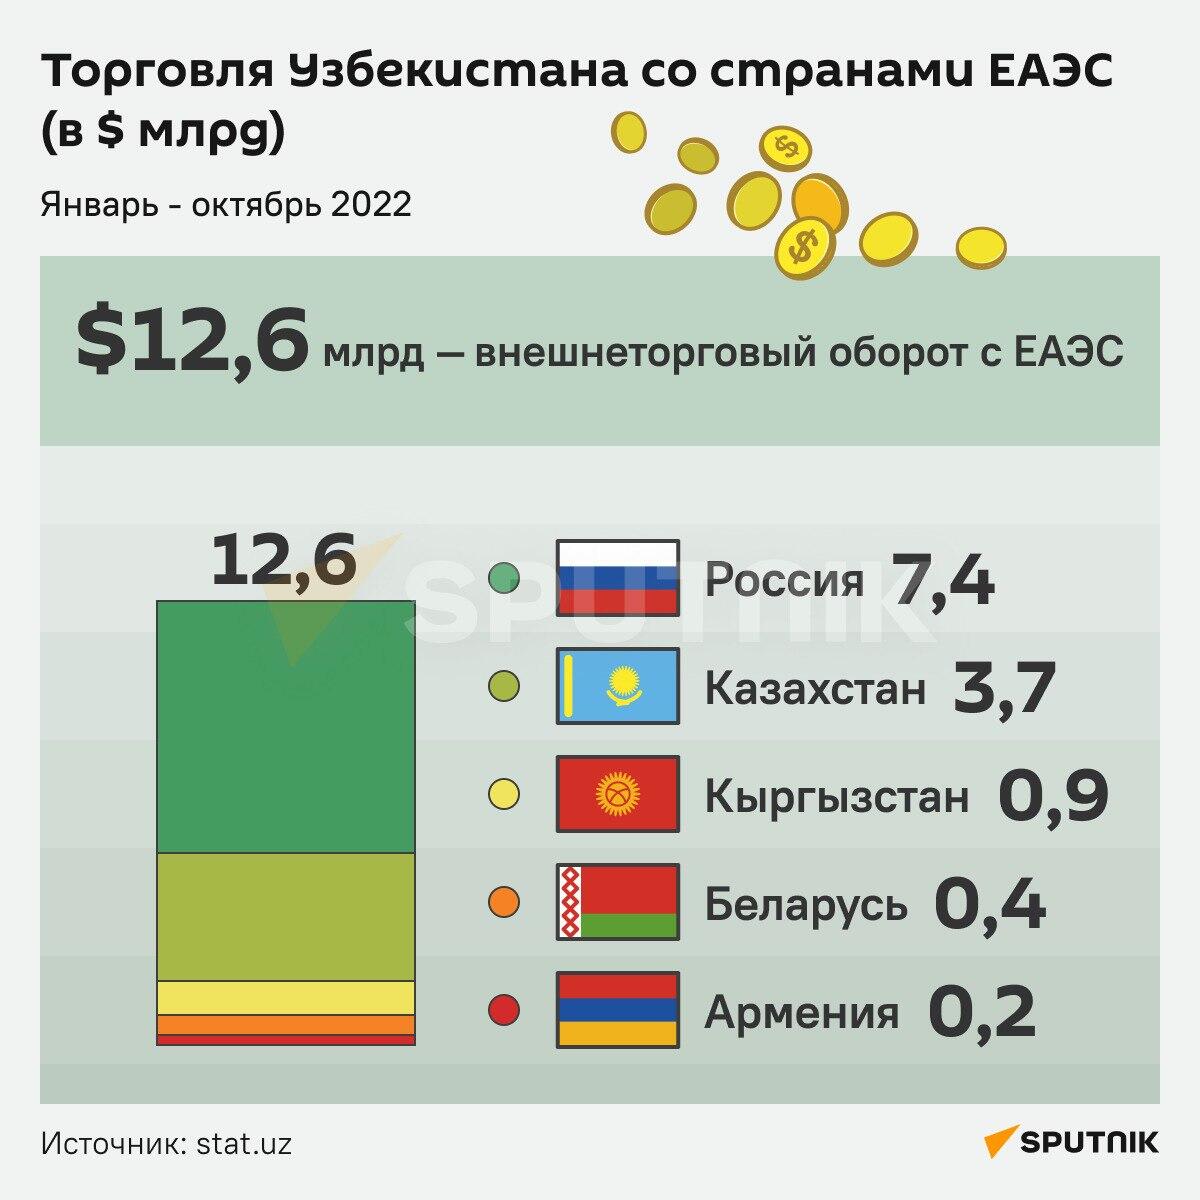 Торговля Узбекистана со странами ЕАЭС инфографика - Sputnik Узбекистан